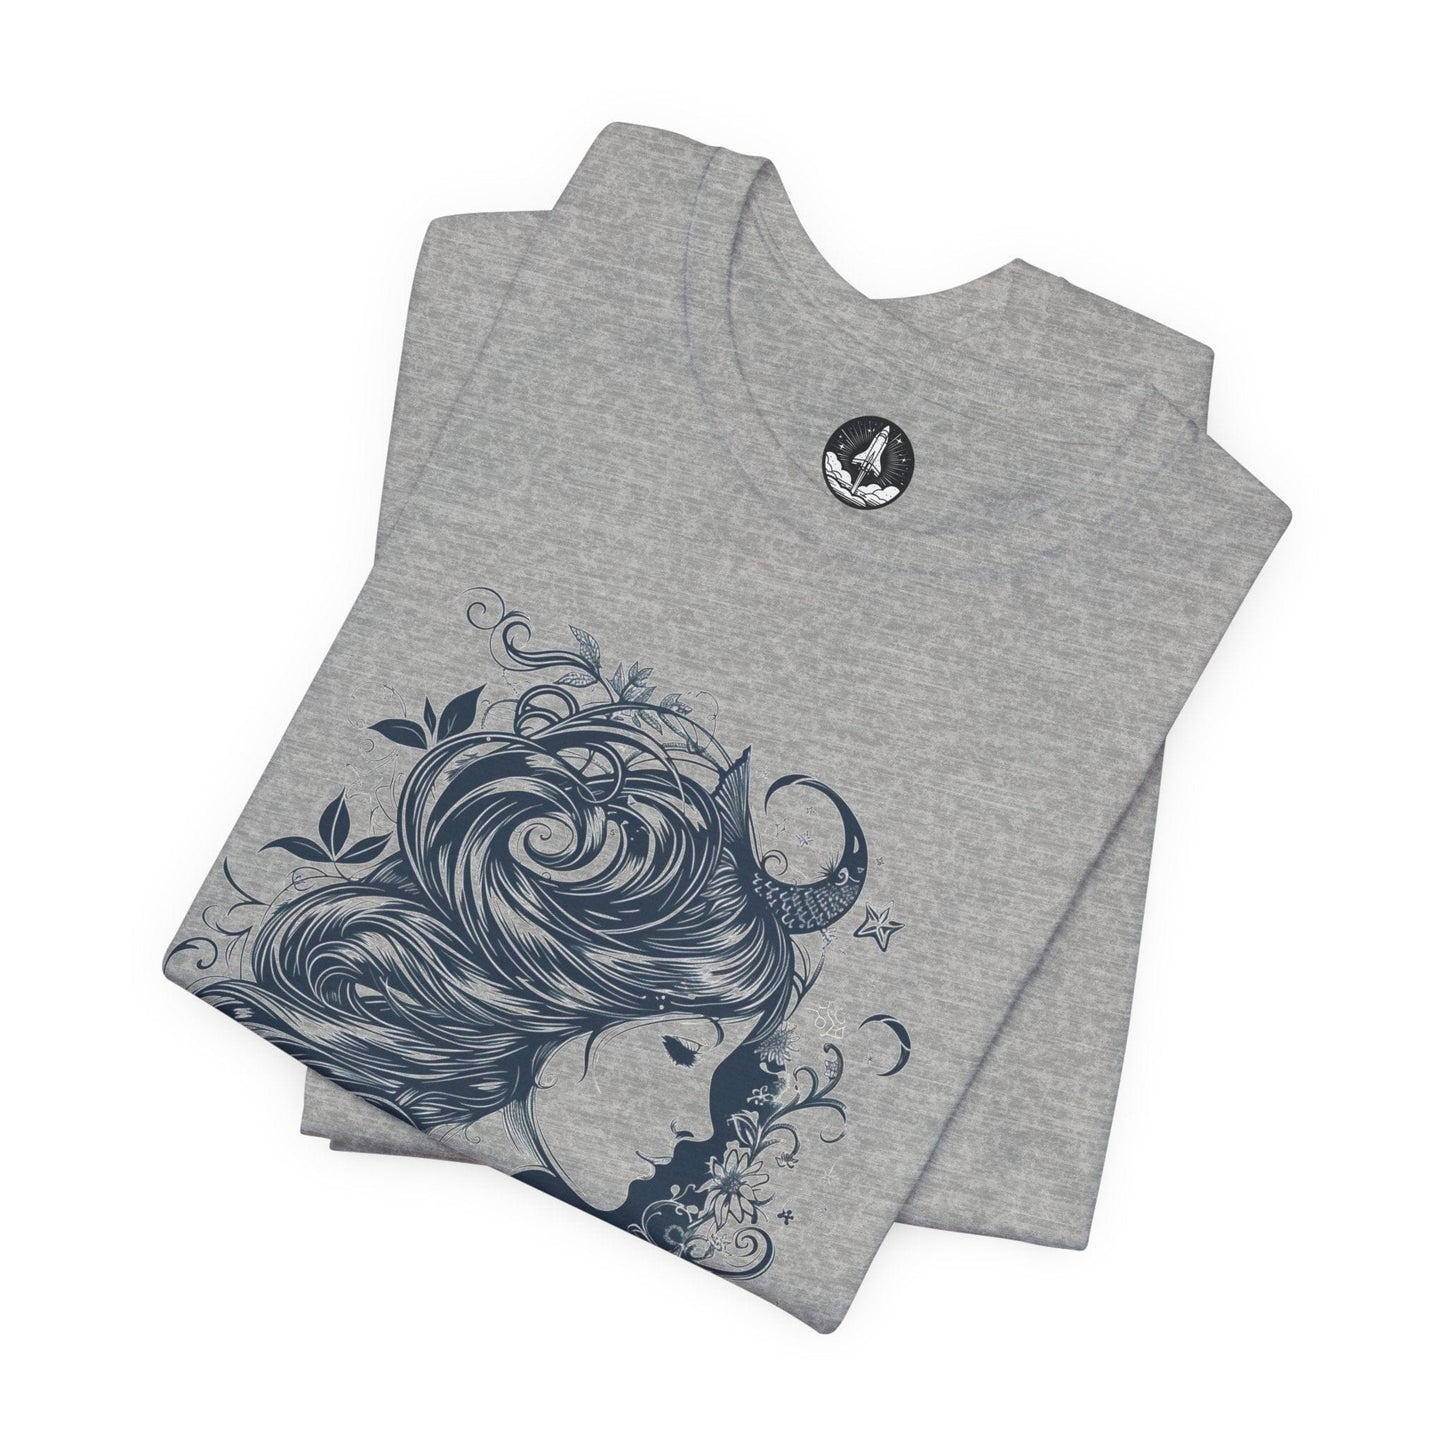 T-Shirt Aquarius Windswept Wonder T-Shirt: Celestial Beauty for the Free Spirit